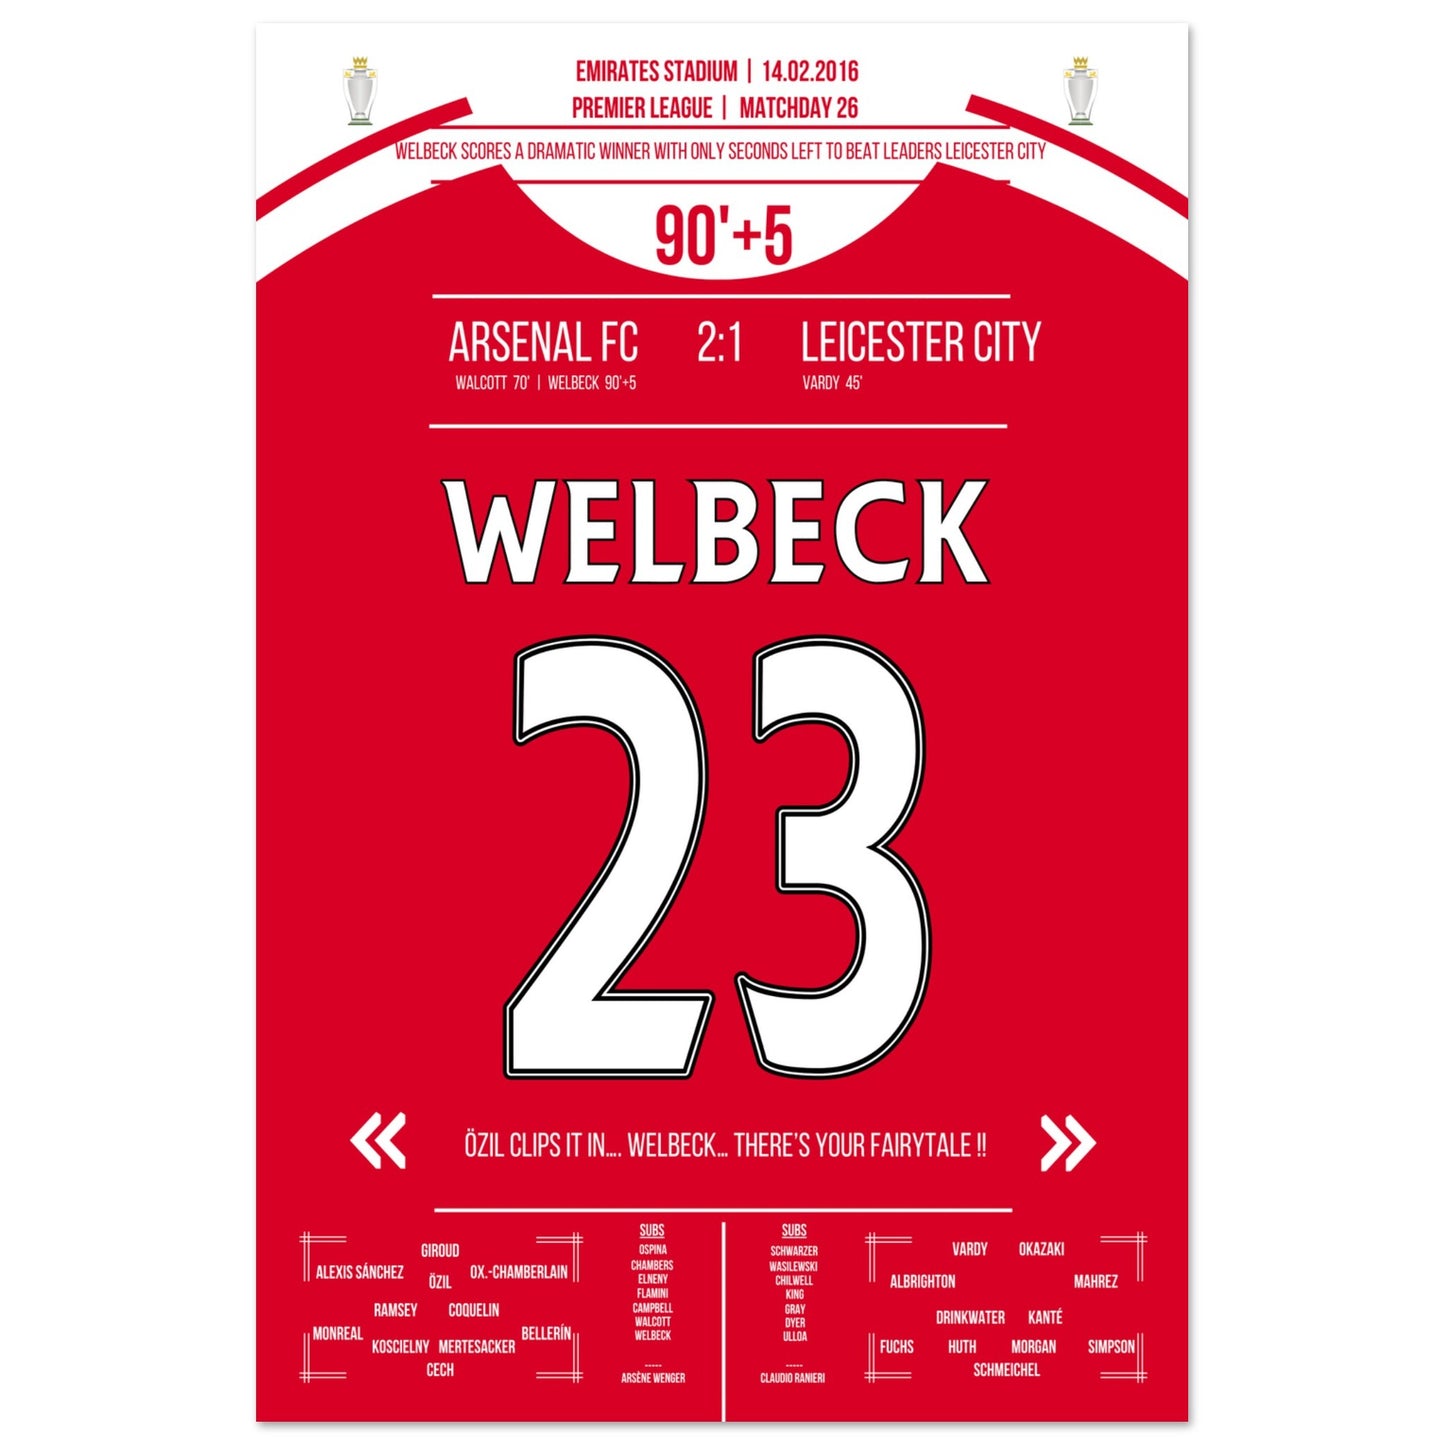 Welbeck's Siegtreffer in letzter Sekunde gegen Leicester in 2016